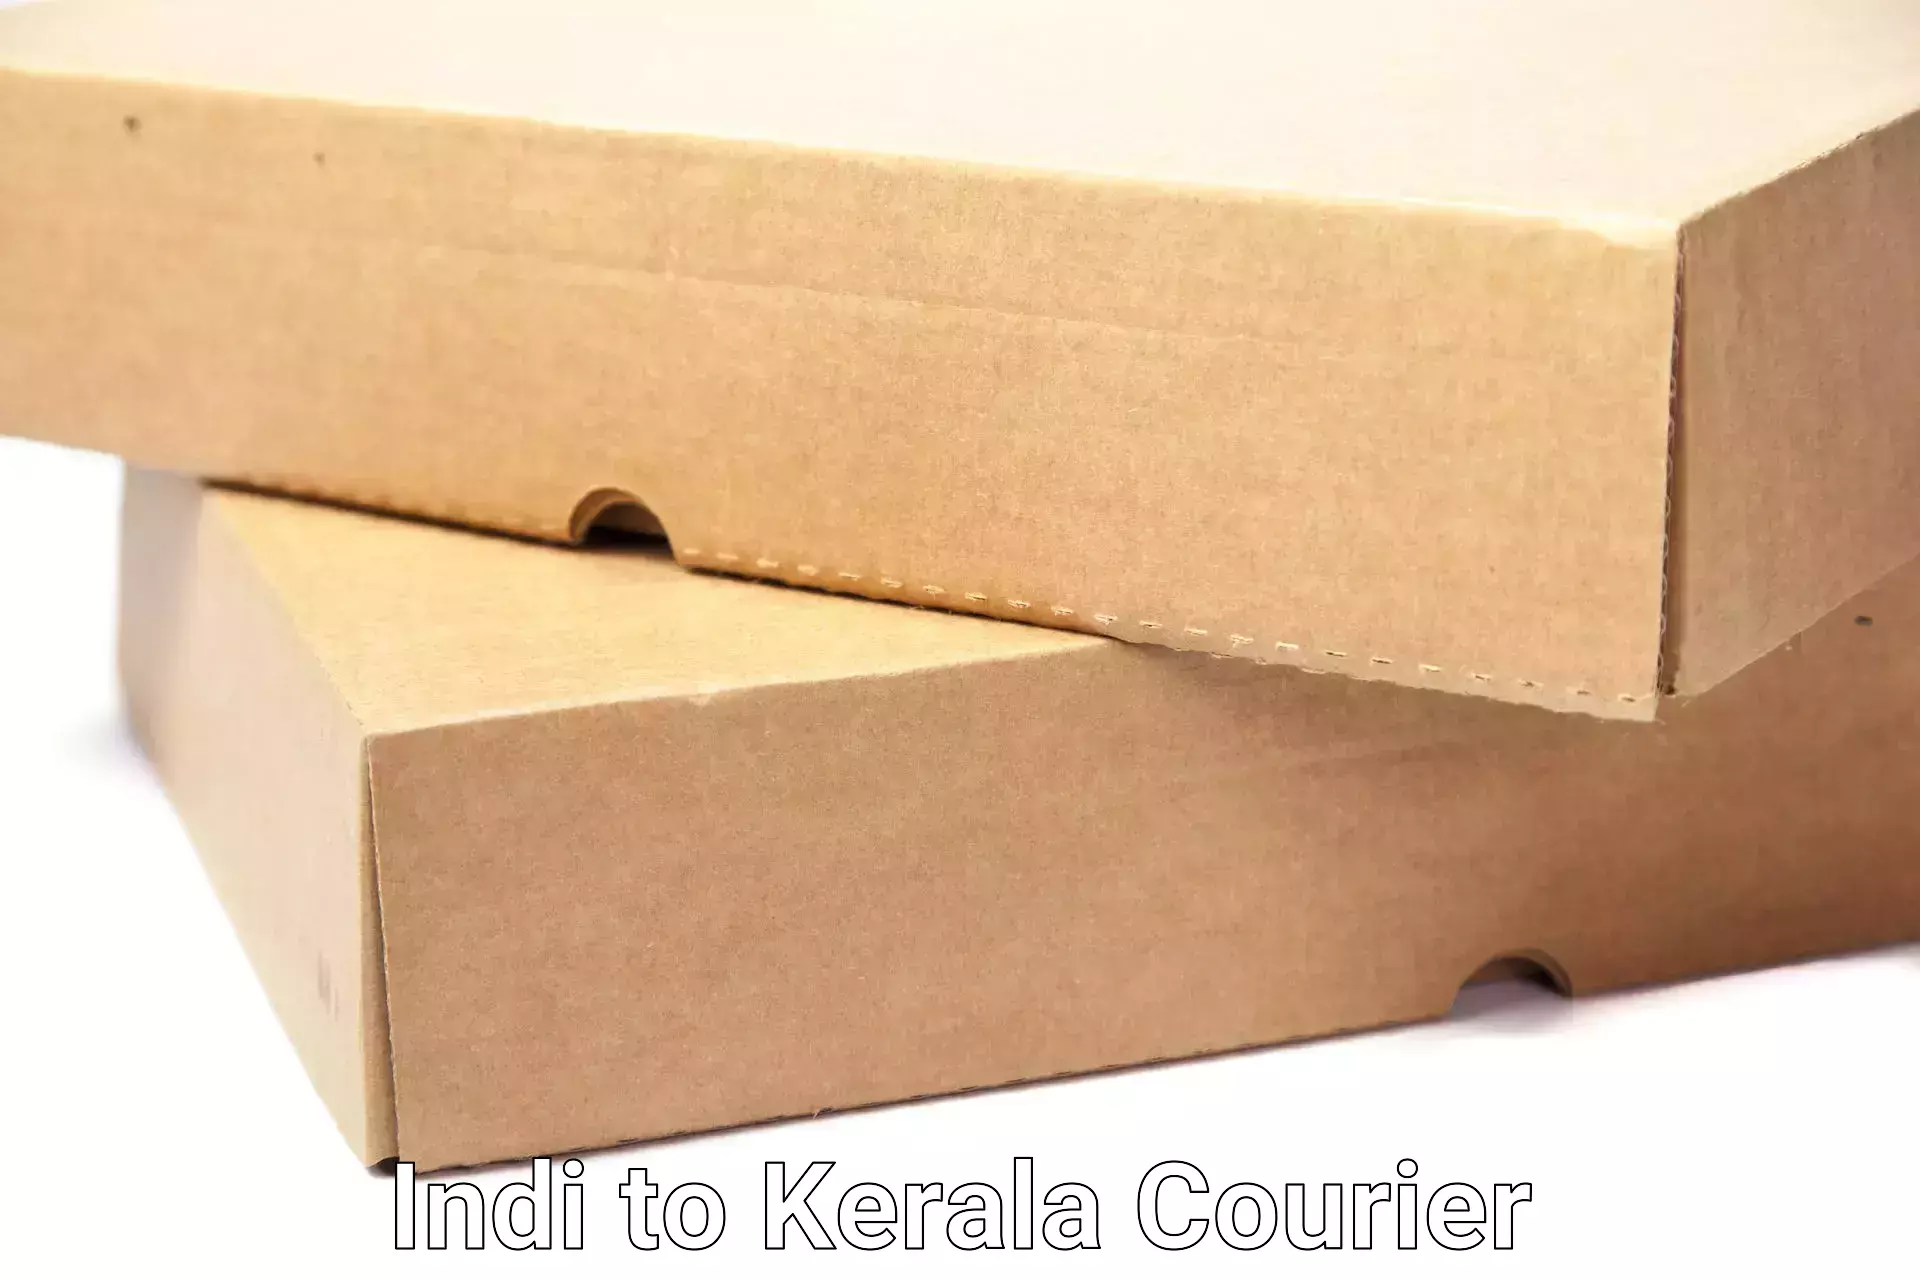 Professional movers Indi to Kerala